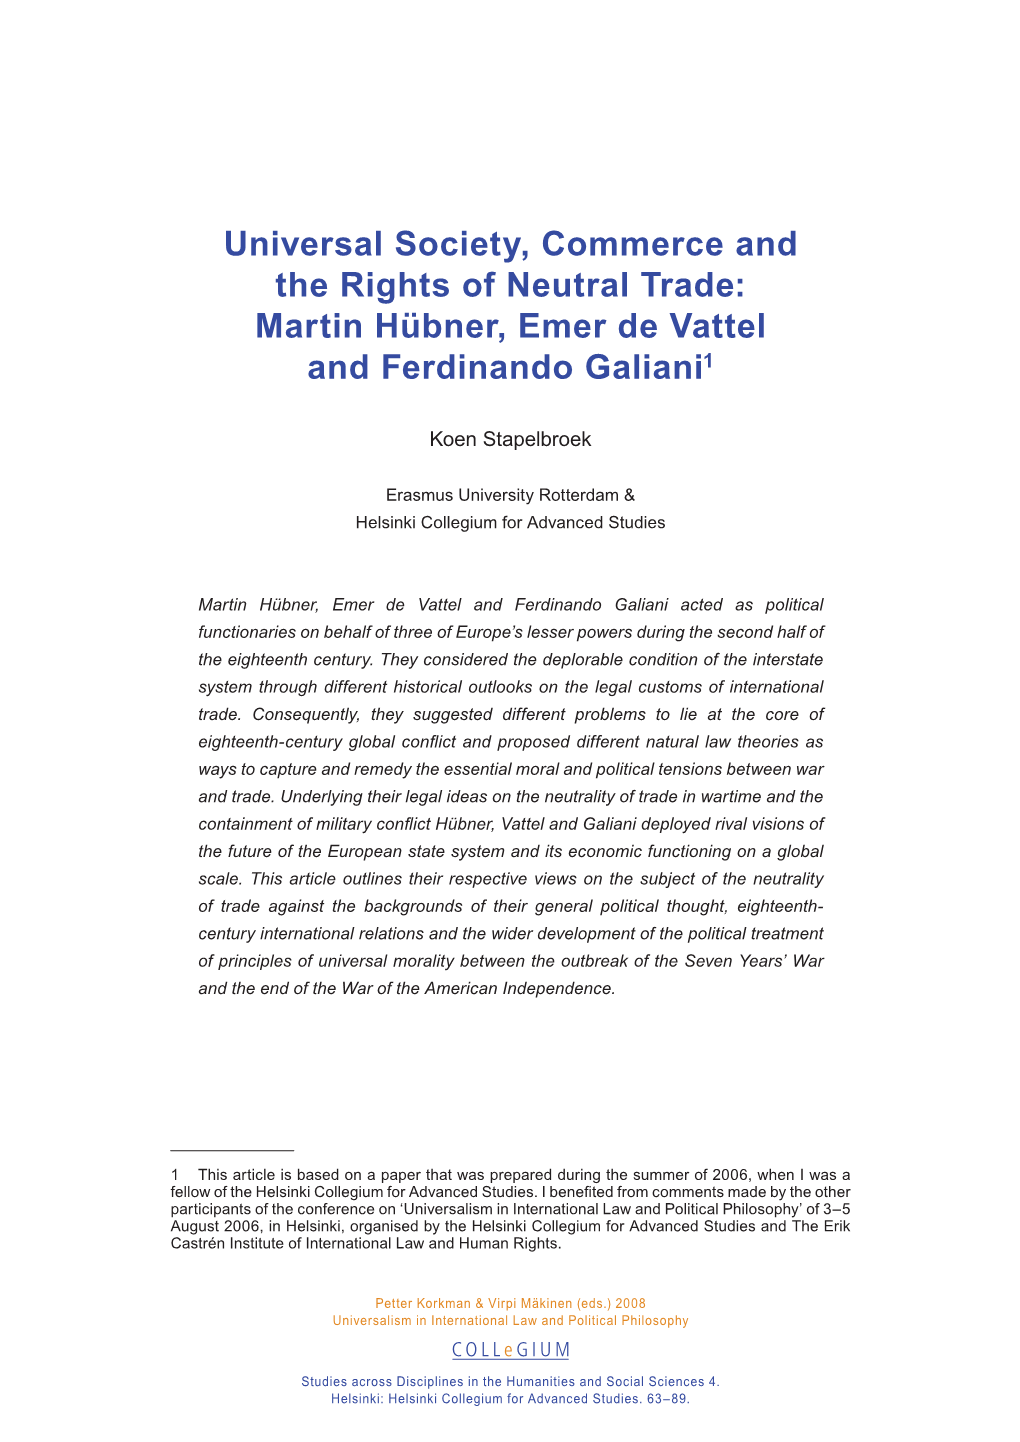 Universal Society, Commerce and the Rights of Neutral Trade: Martin Hübner, Emer De Vattel and Ferdinando Galiani1